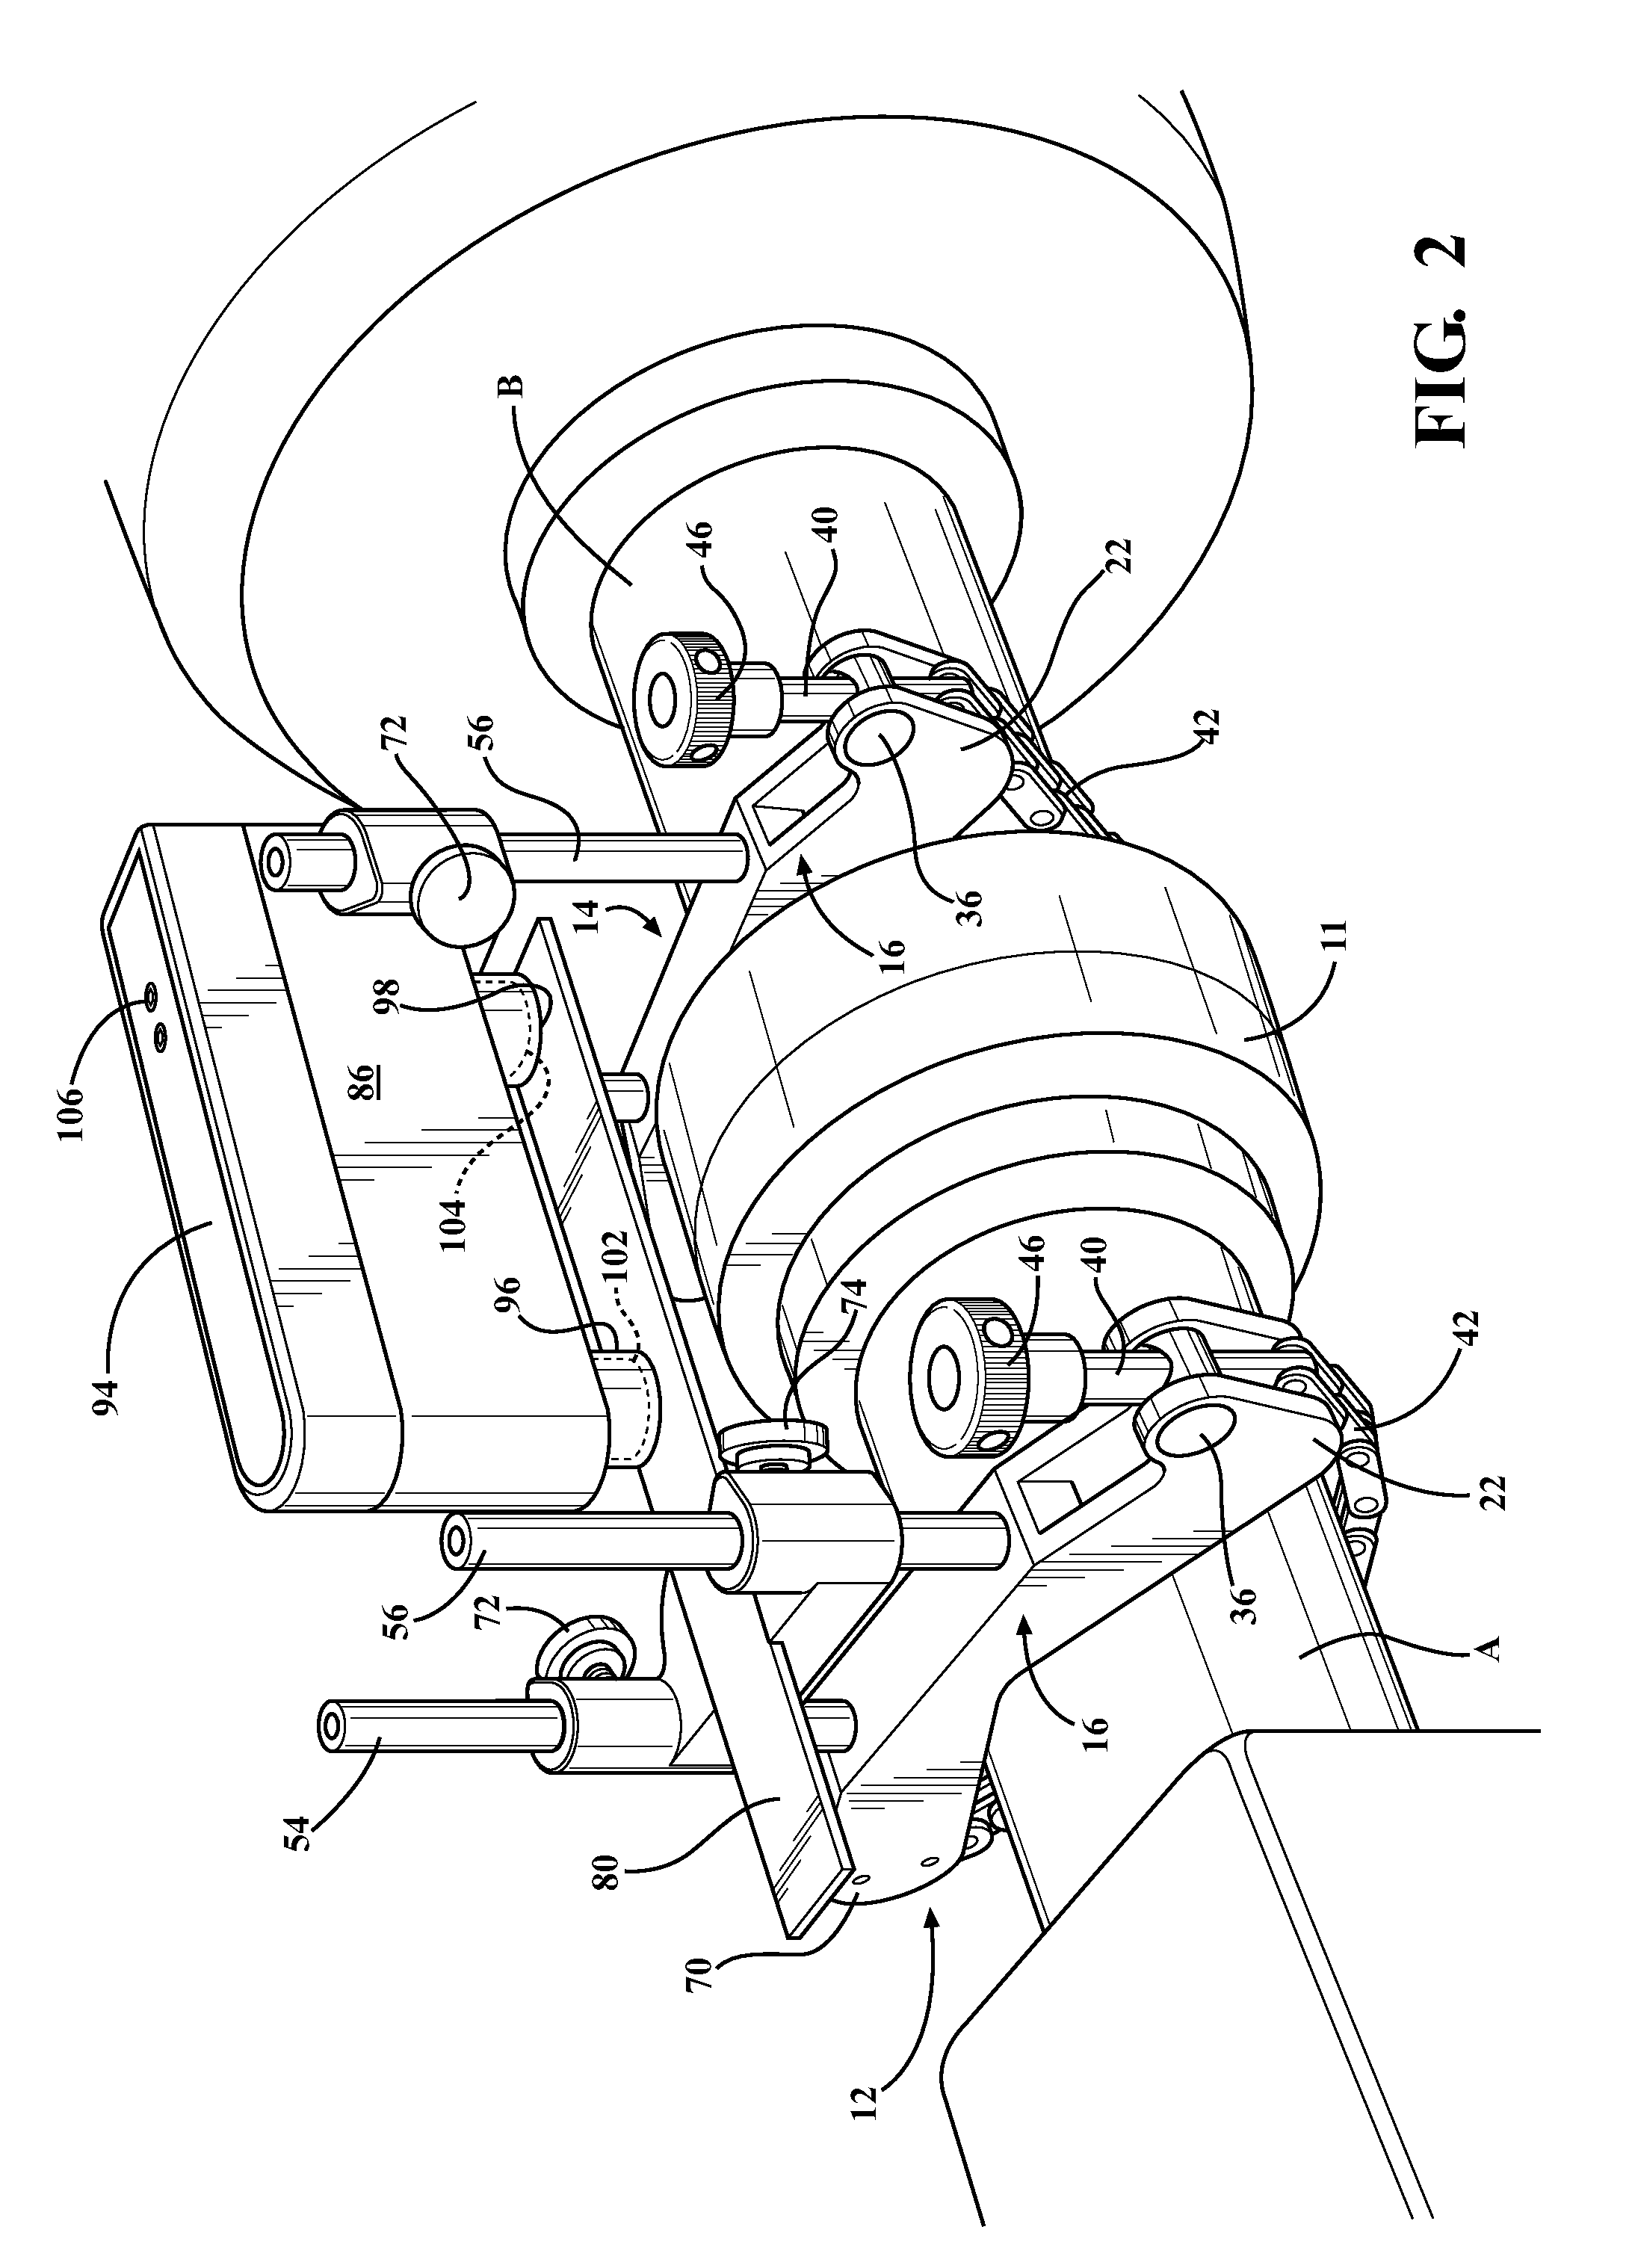 Alignment apparatus and method